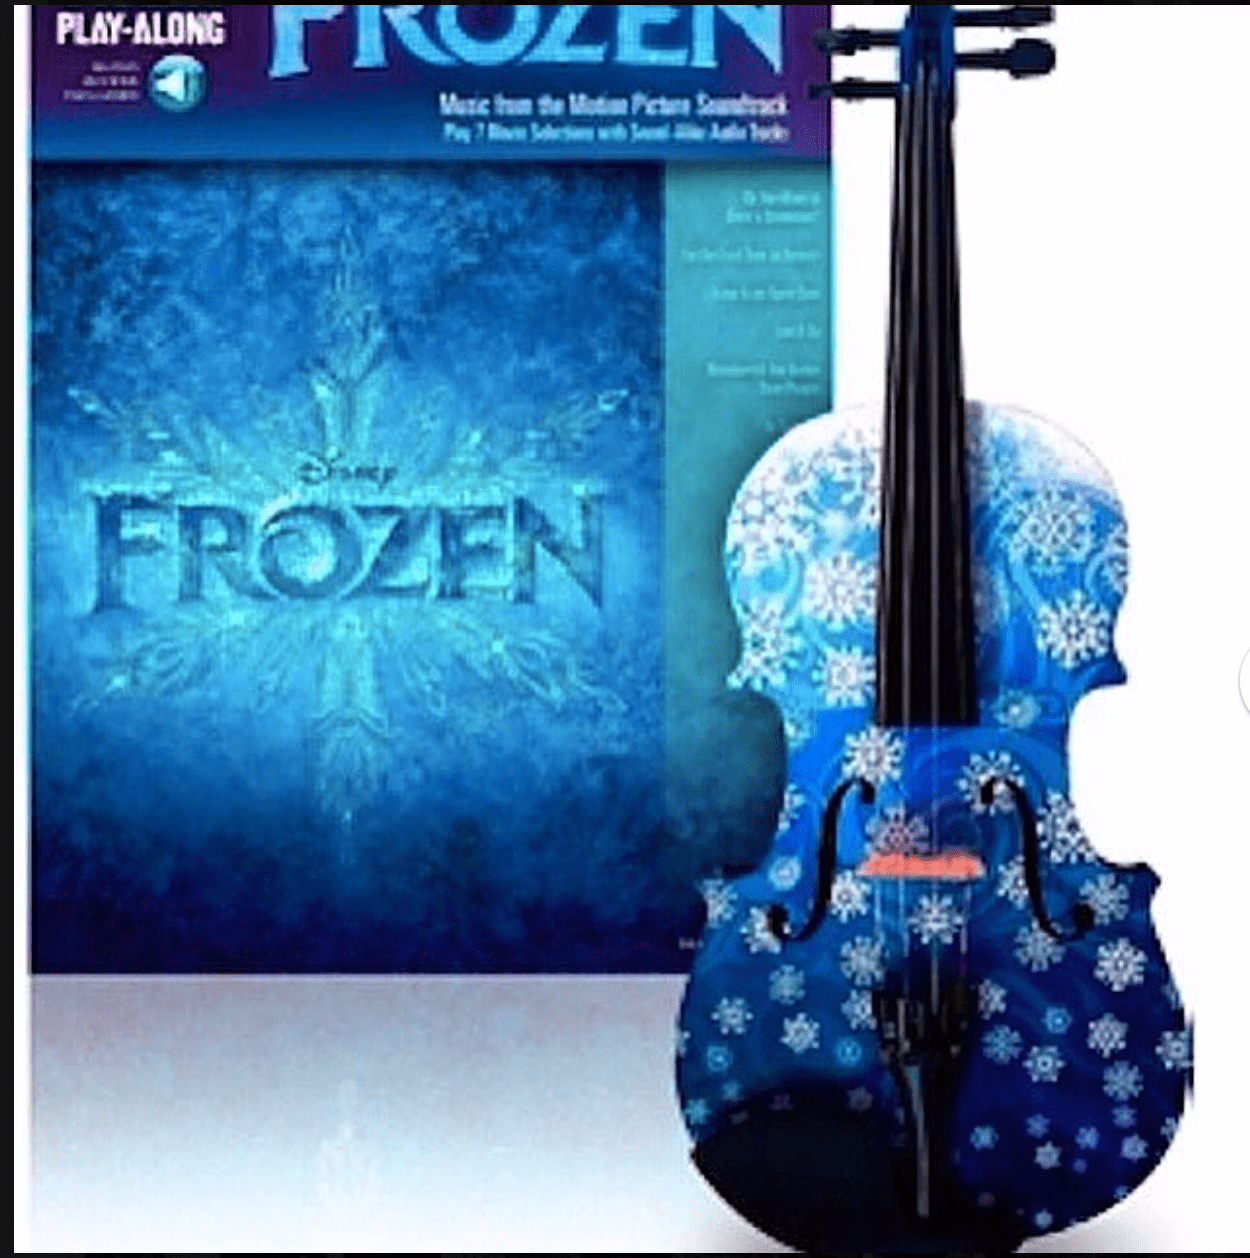 Rozanna's Violins Snowflake White Glitter Violin Outfit